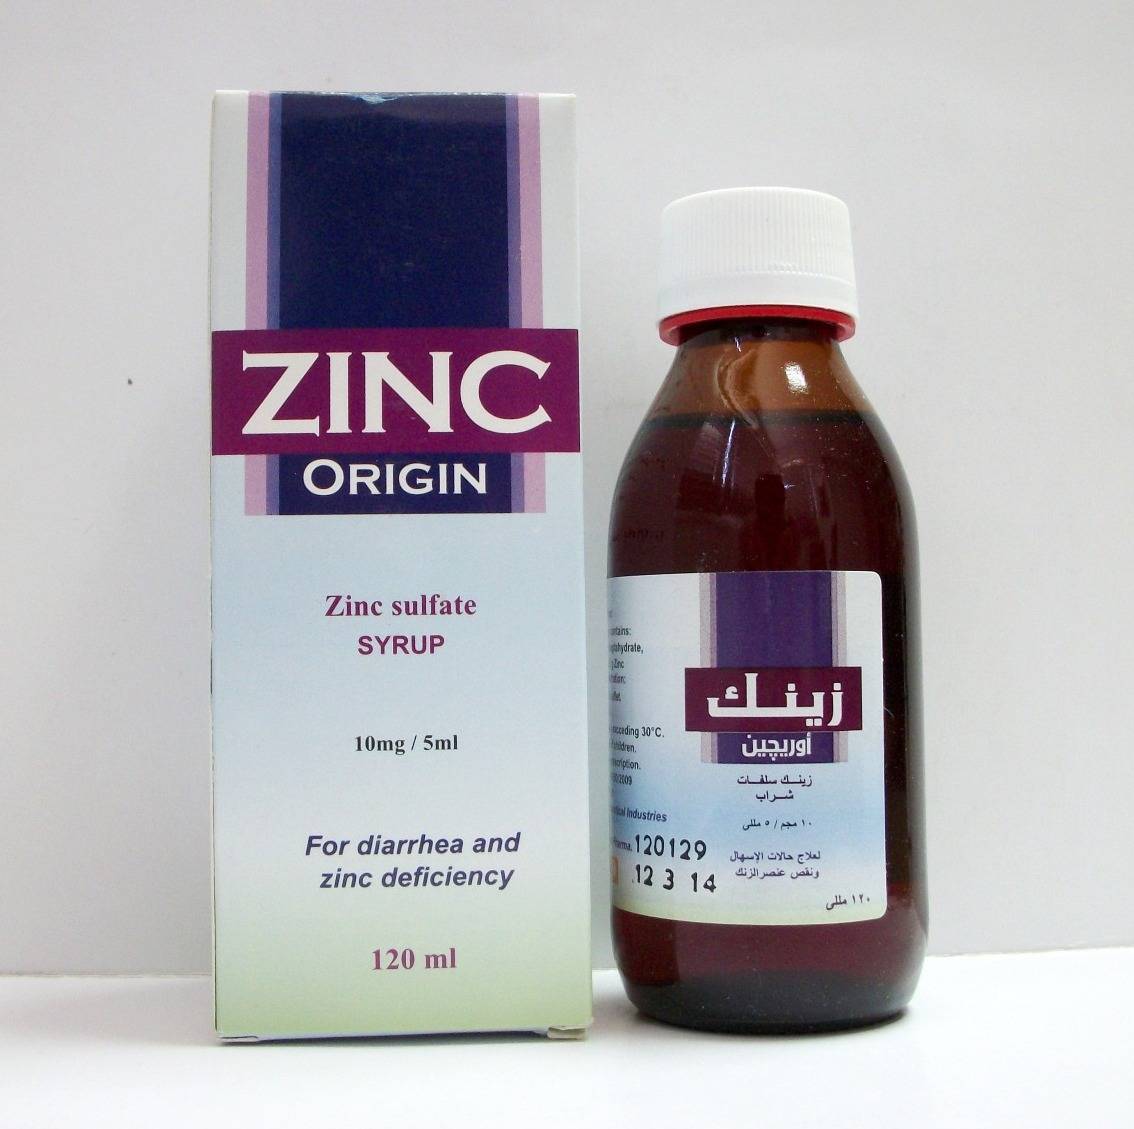 Zinc origin - Syrup